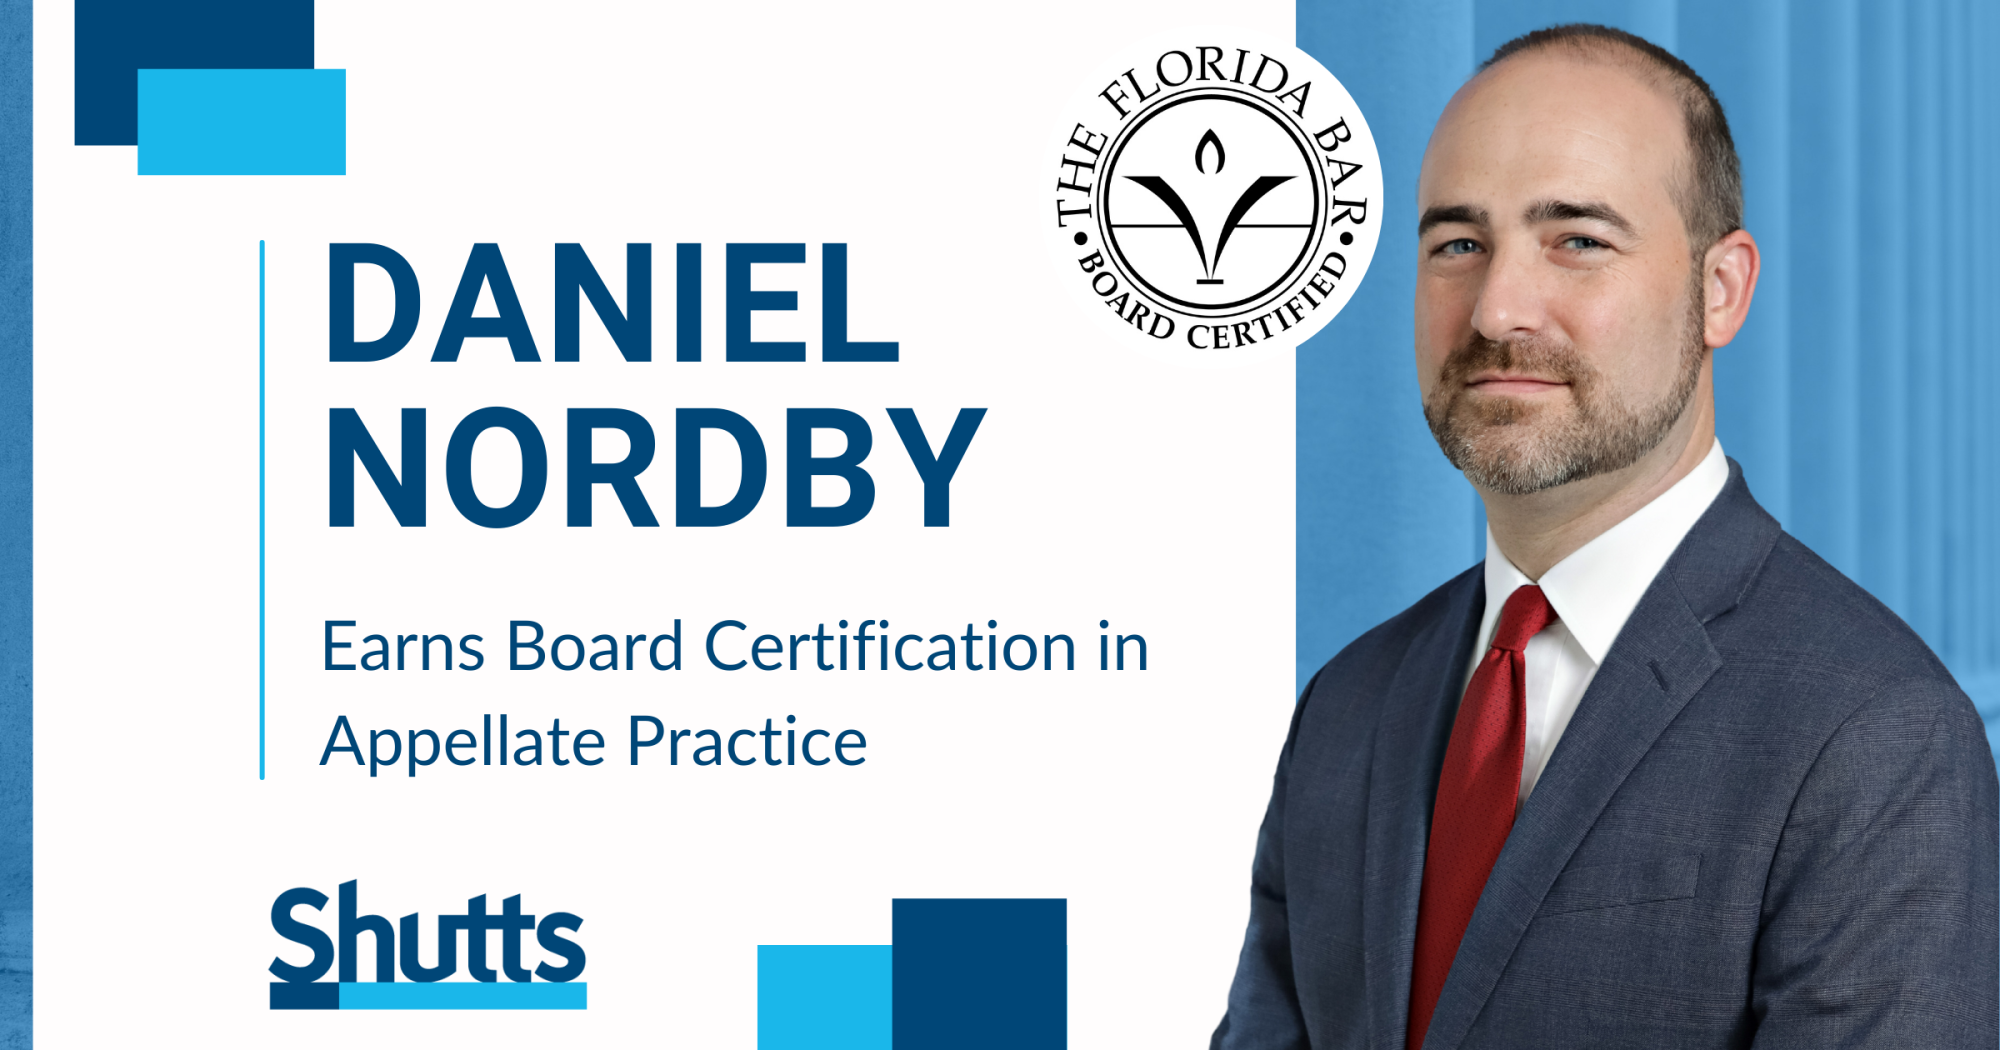 Daniel Nordby Earns Board Certification in Appellate Practice